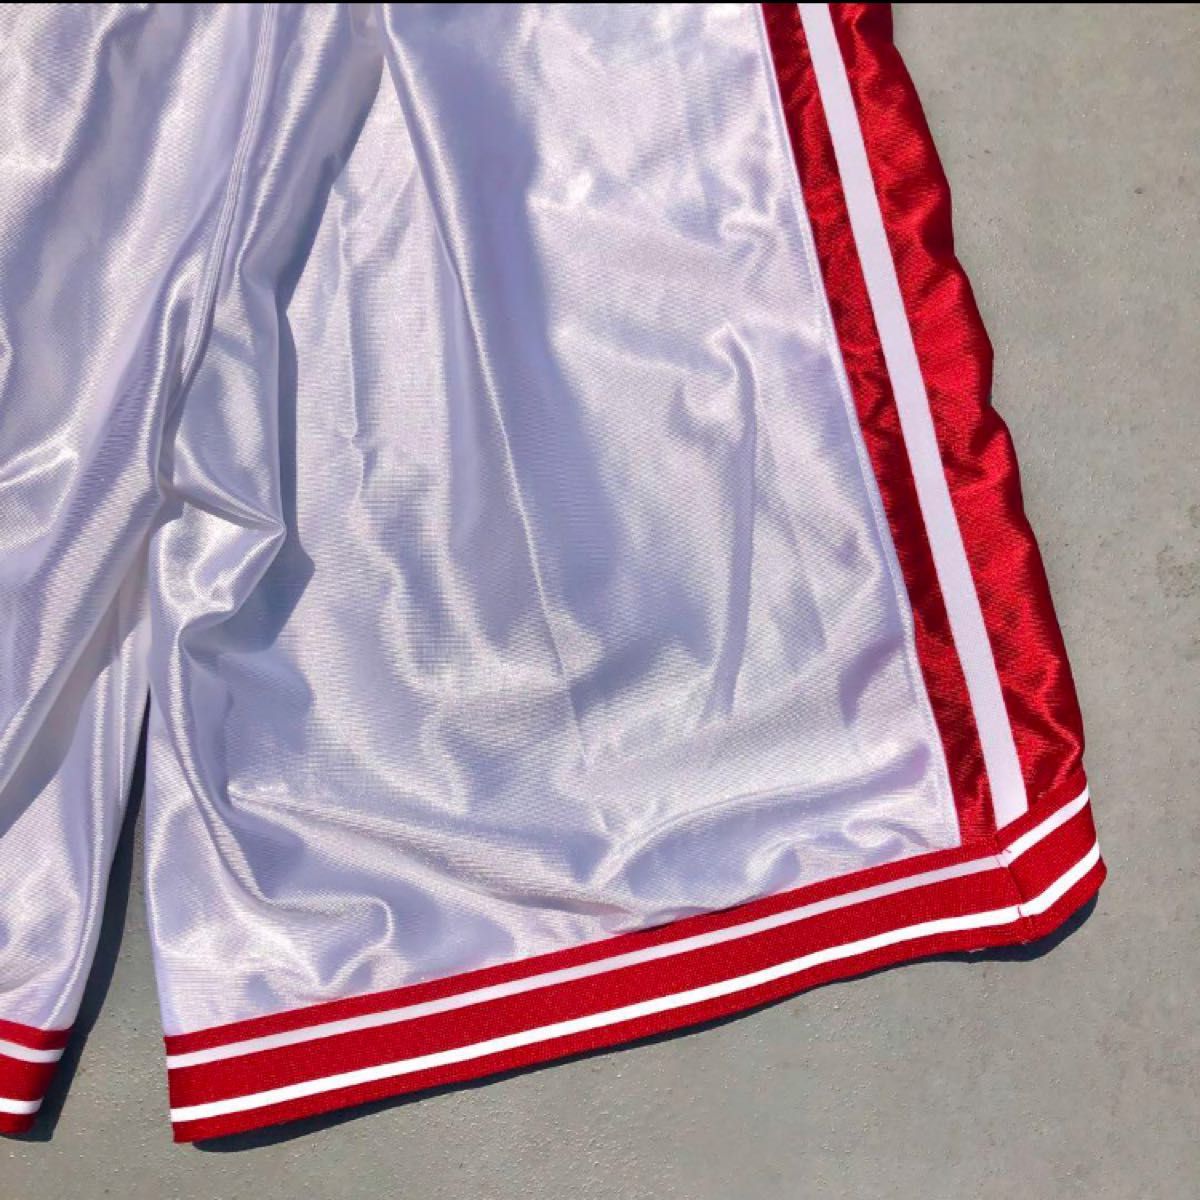 nike ナイキ バスケットボール バスパン ハーフパンツ ユニフォーム Lサイズ ホワイト レッド 白色 赤色 DRI-FIT